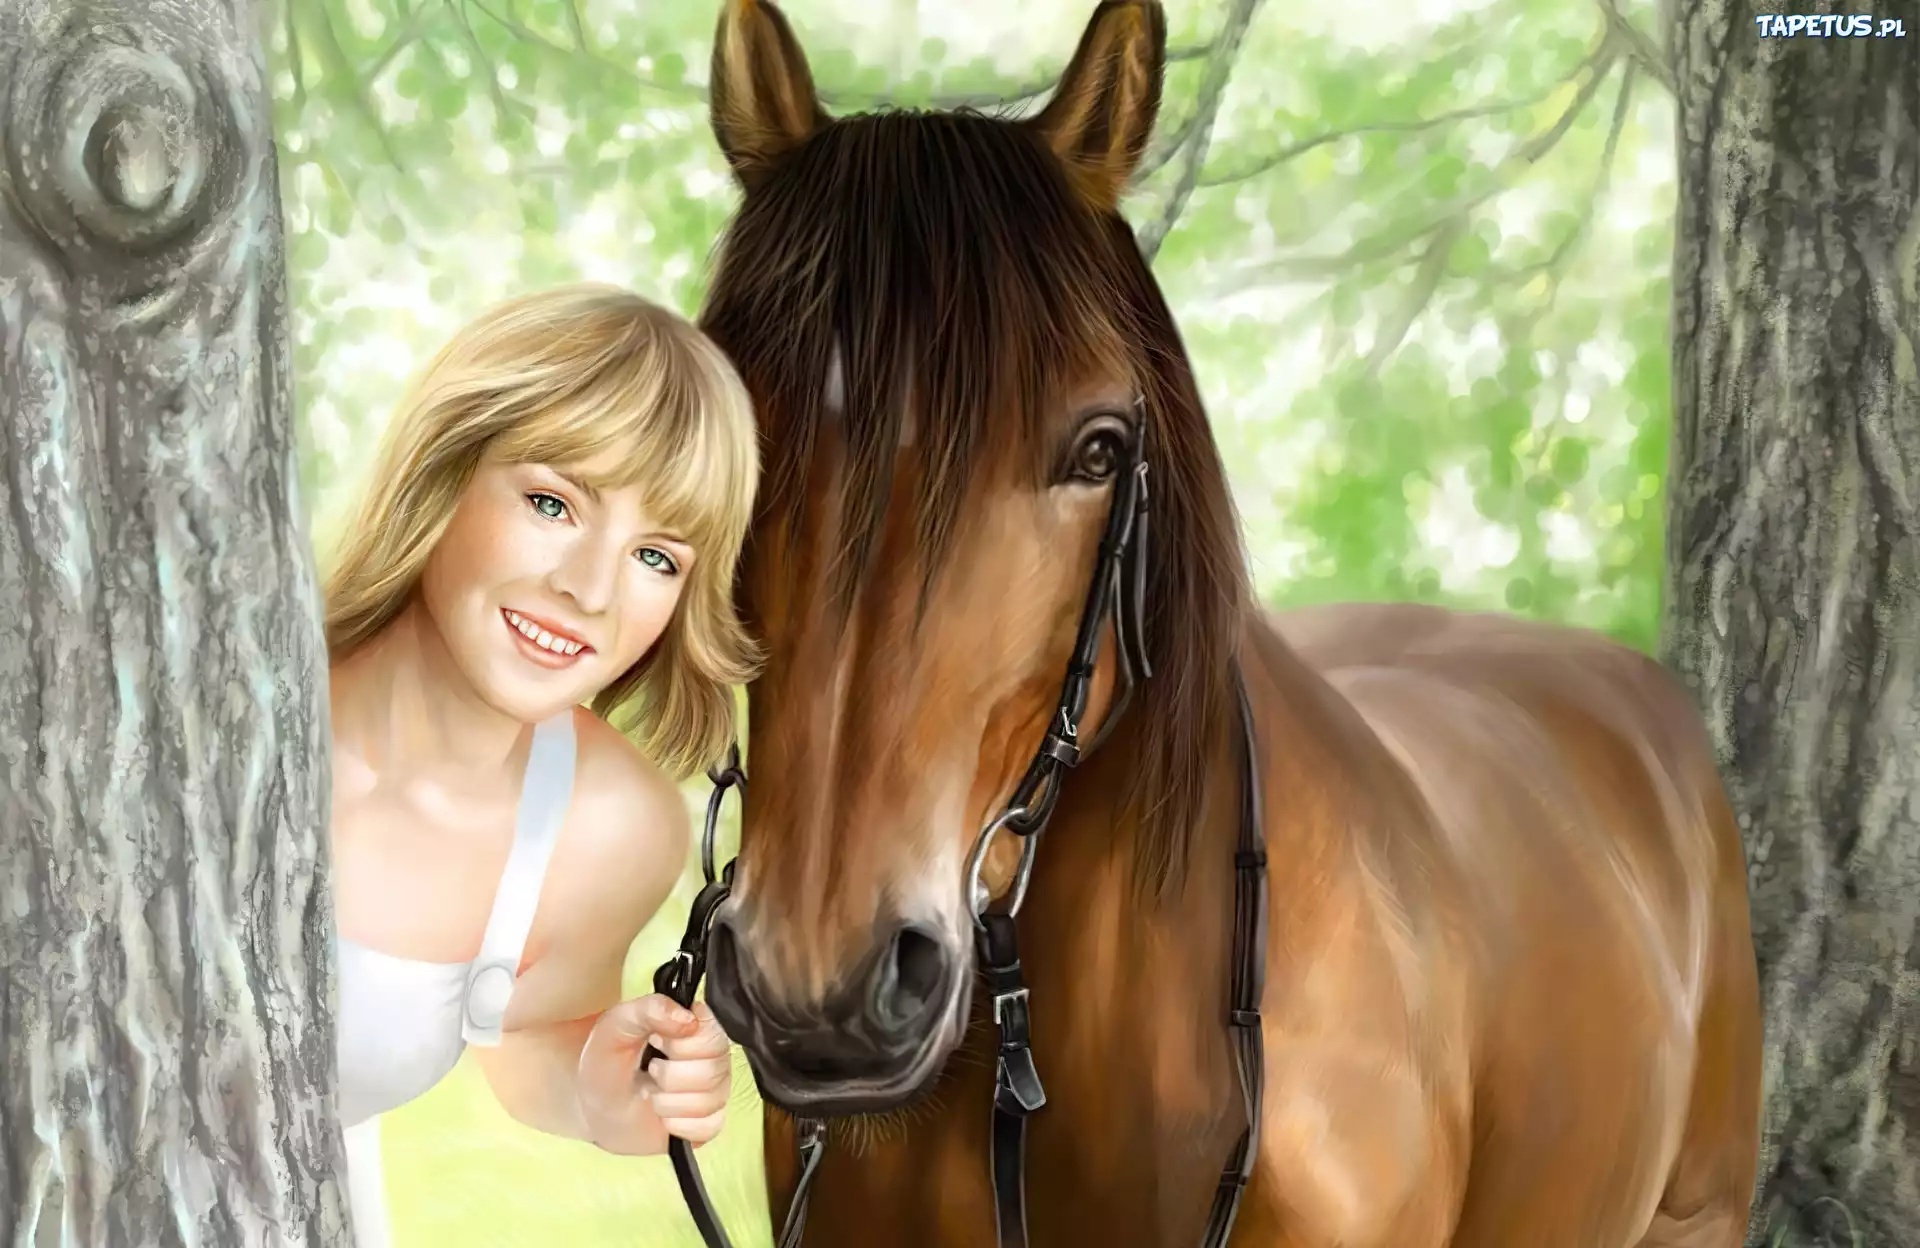 Лошадку ведет. Девушка с лошадью. Картина лошади. Картина девушка на лошади. Девочка на лошади.